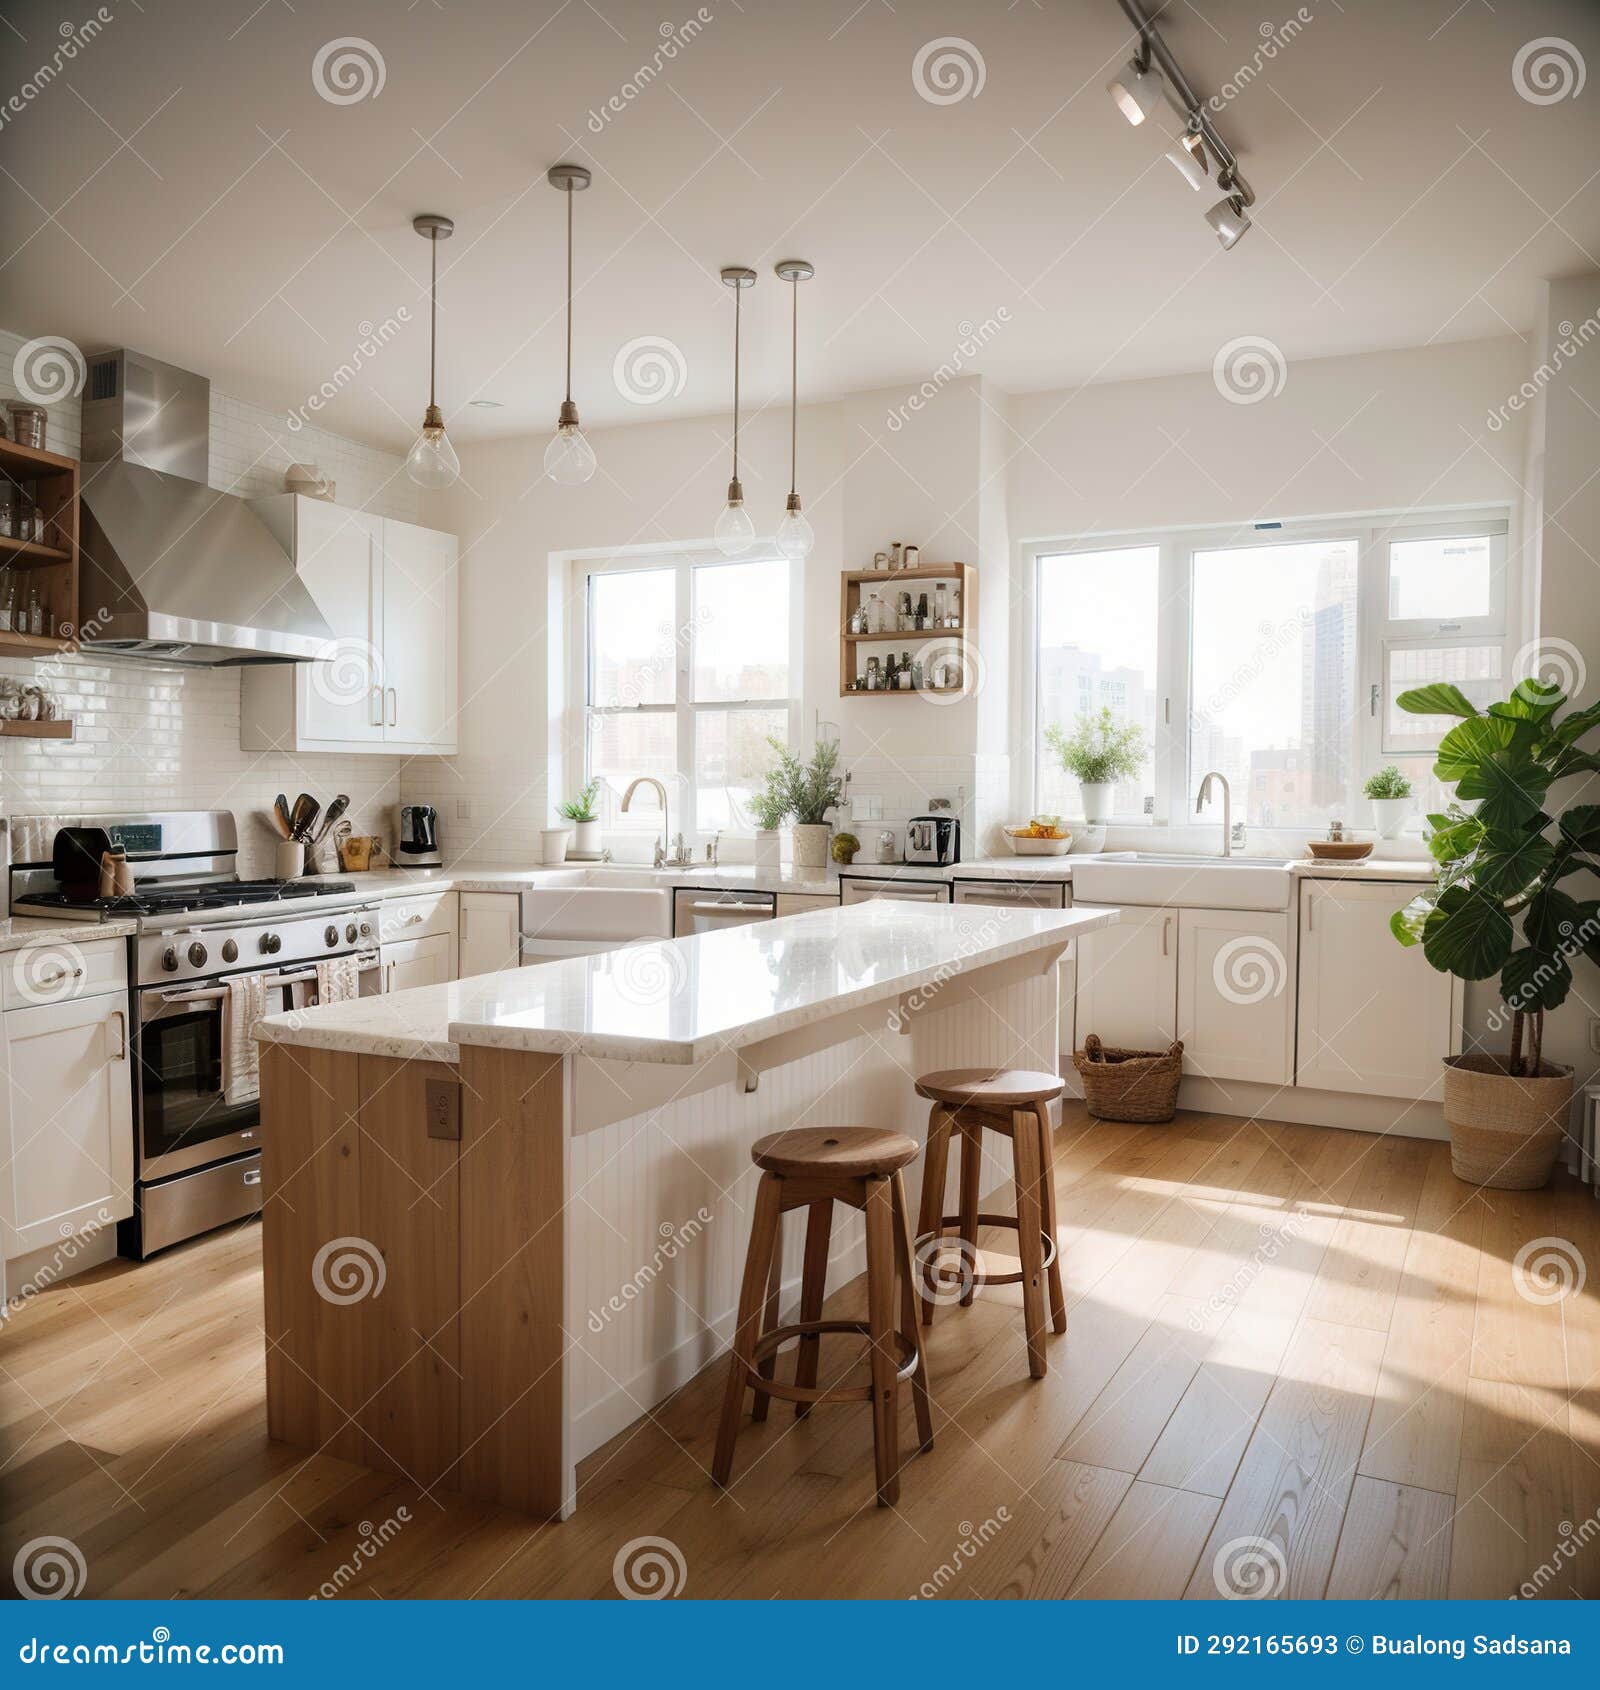 Beige kitchen countertops close up Stock Photo by ©denisismagilov